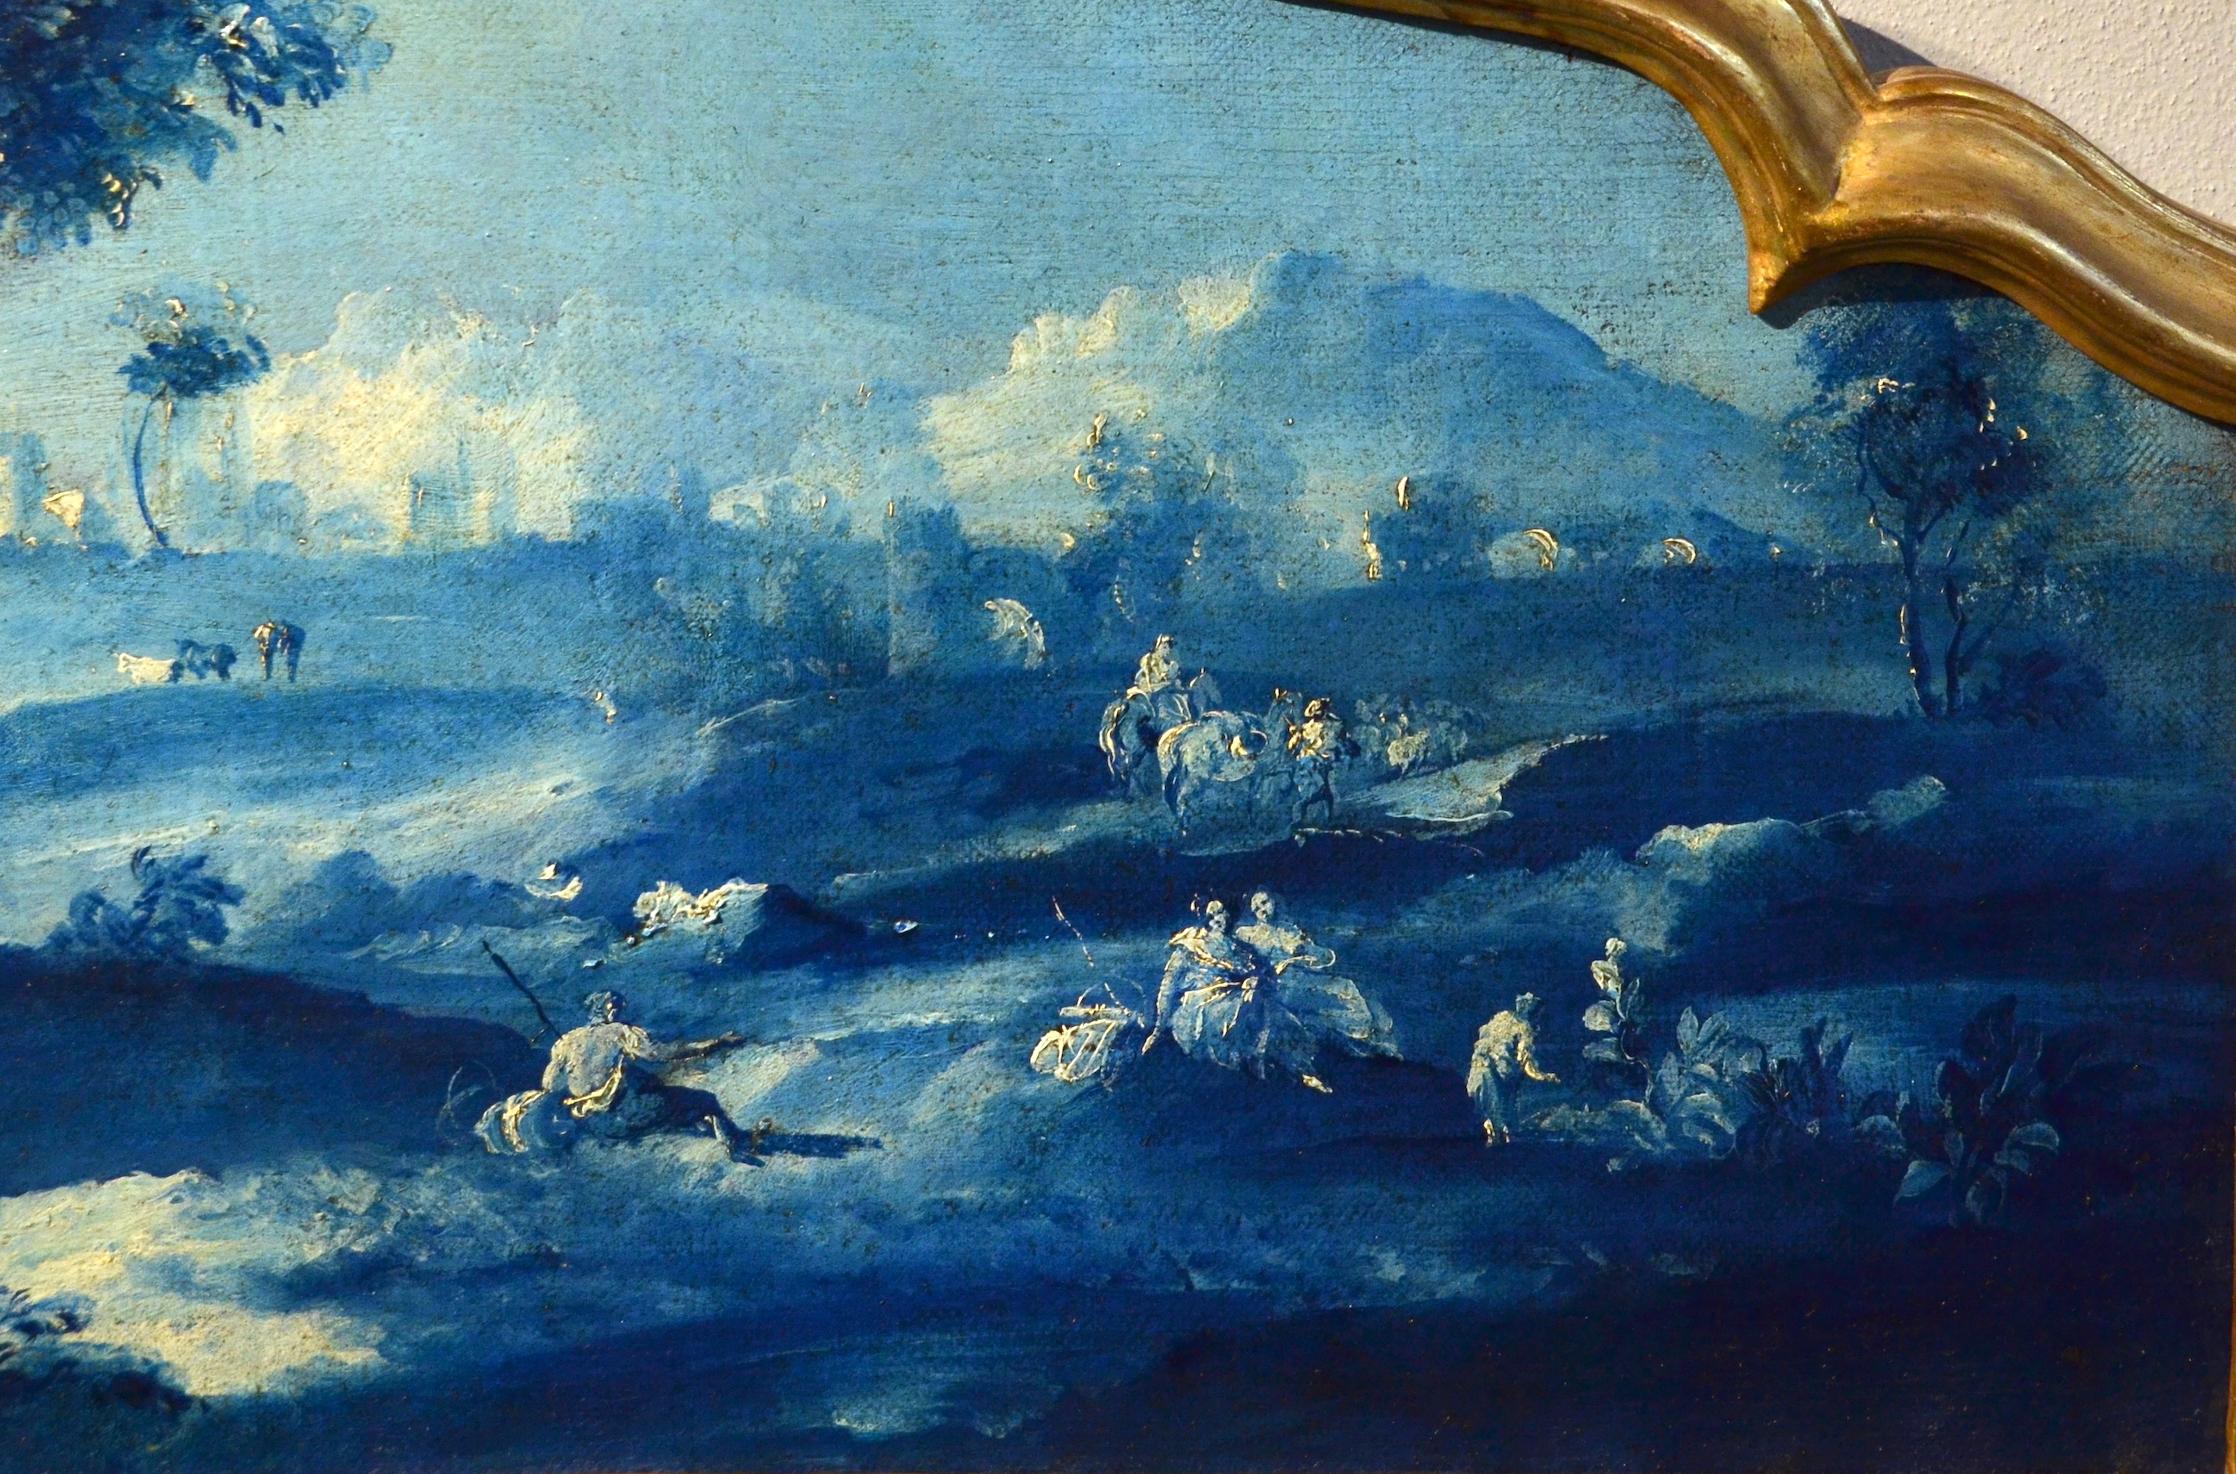 Paint Oil on canvas Pair Landscape Wood See Lake Venezia Italy Baroque Ricci Art 12